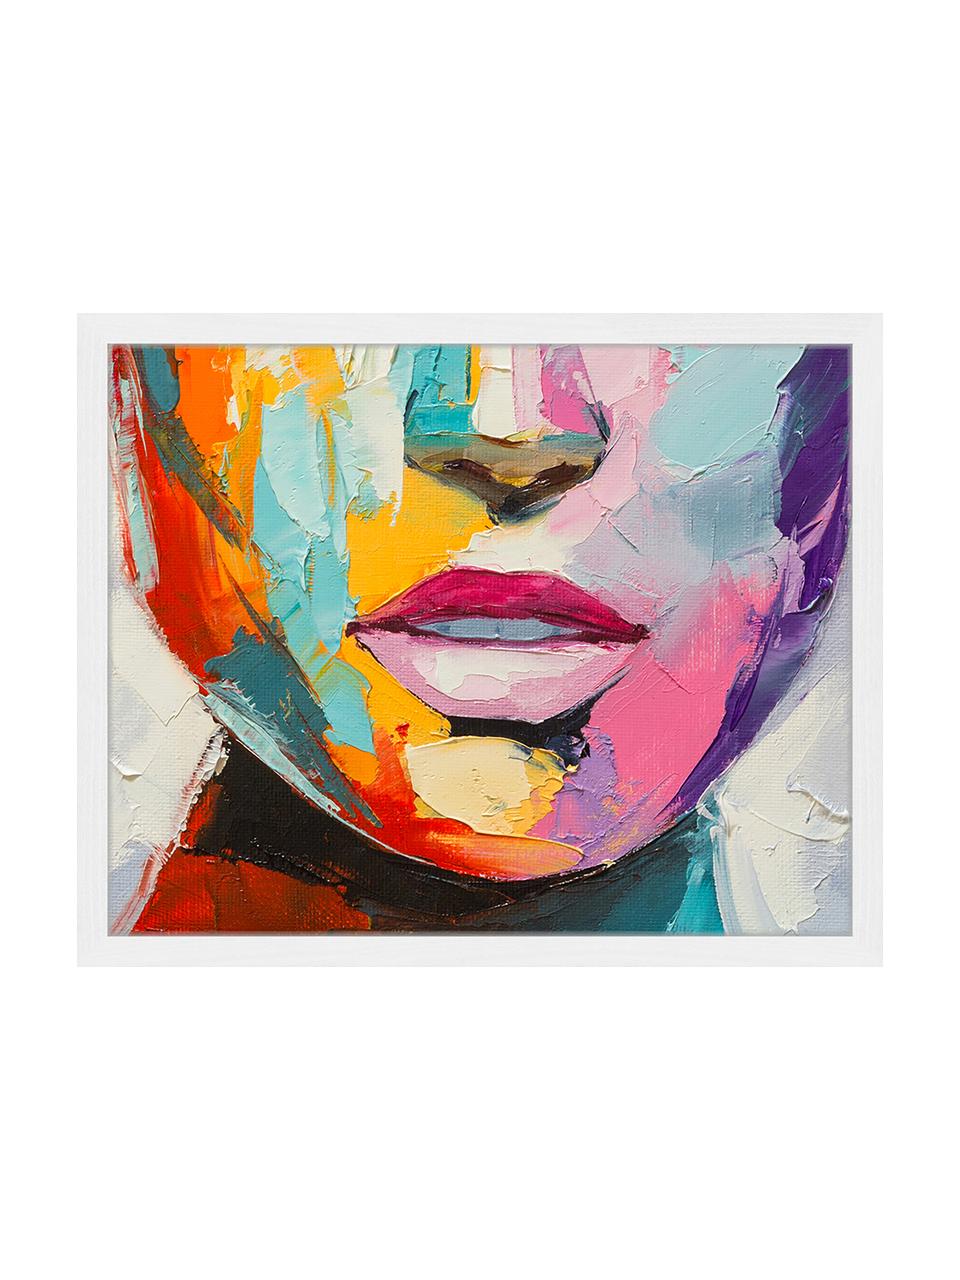 Gerahmter Digitaldruck Colorful Emotions, Bild: Digitaldruck auf Papier, , Rahmen: Holz, lackiert, Front: Plexiglas, Mehrfarbig, 53 x 43 cm